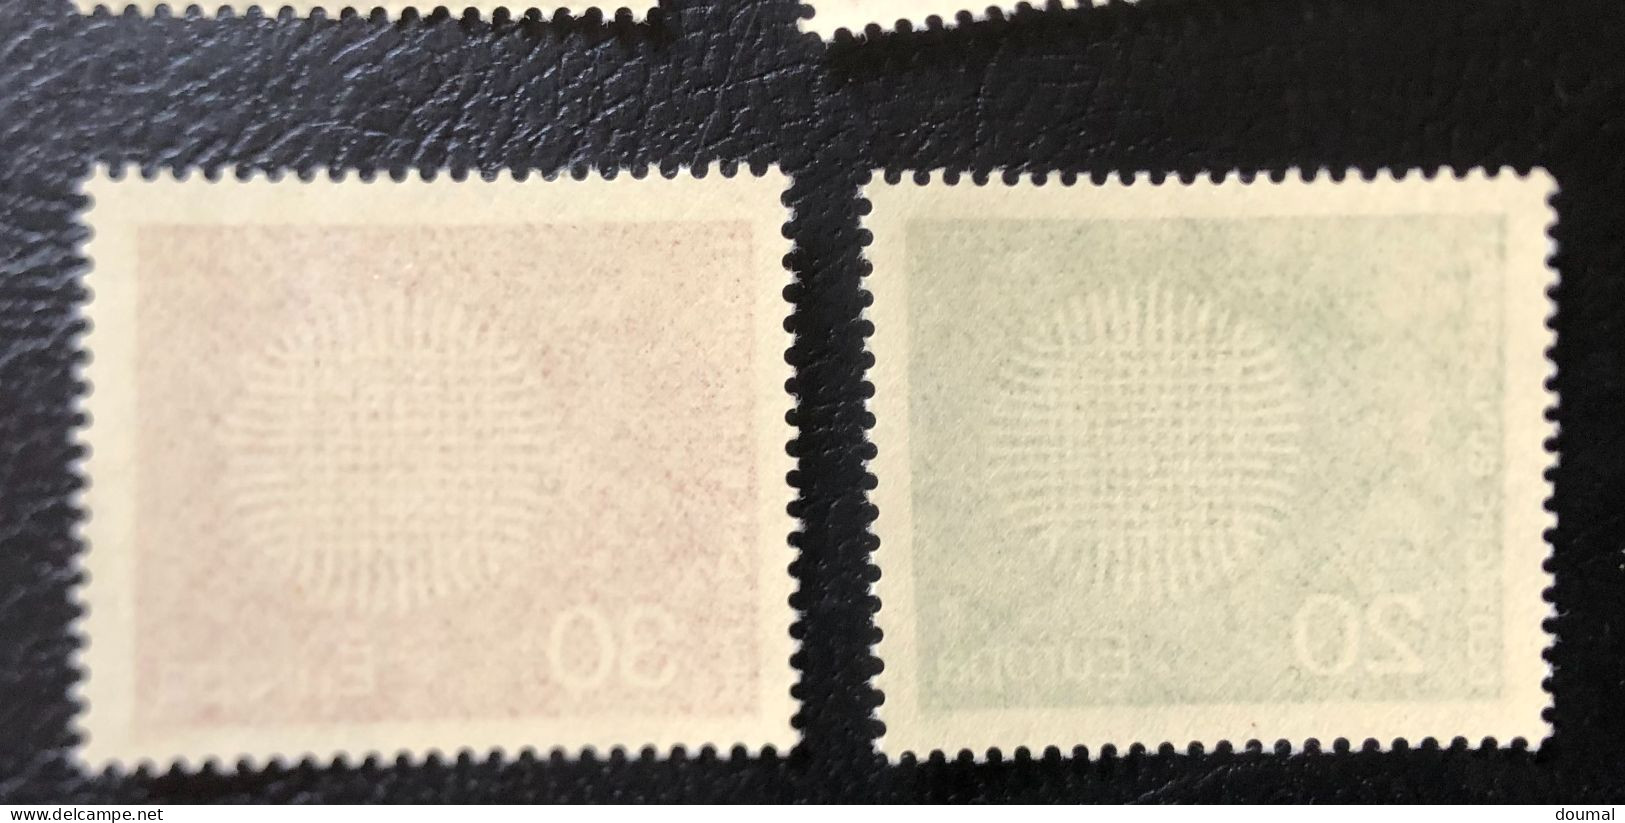 DeuTsche BundesposT stamps Europa series